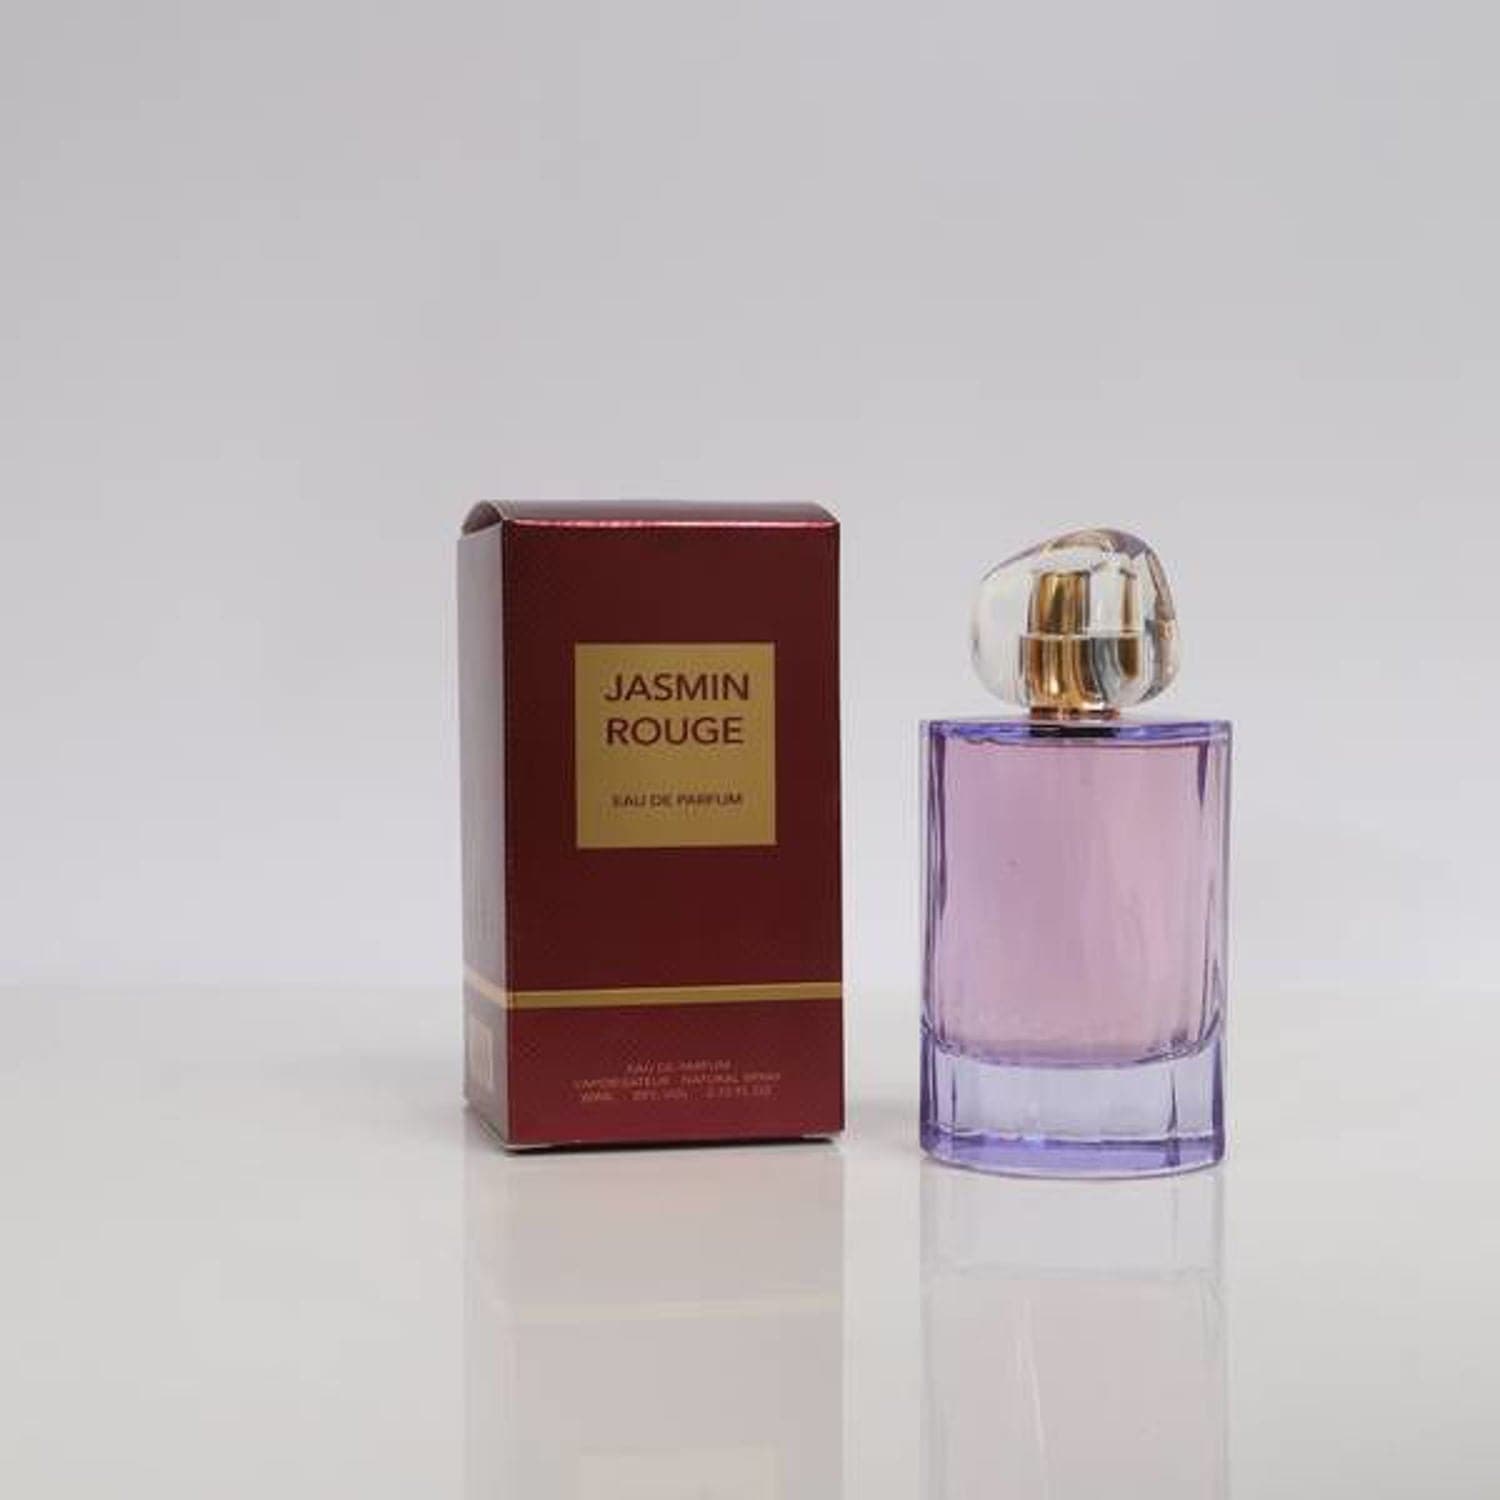 Hemani Jasmin Rouge Perfume 80Ml - Premium  from Hemani - Just Rs 700.00! Shop now at Cozmetica